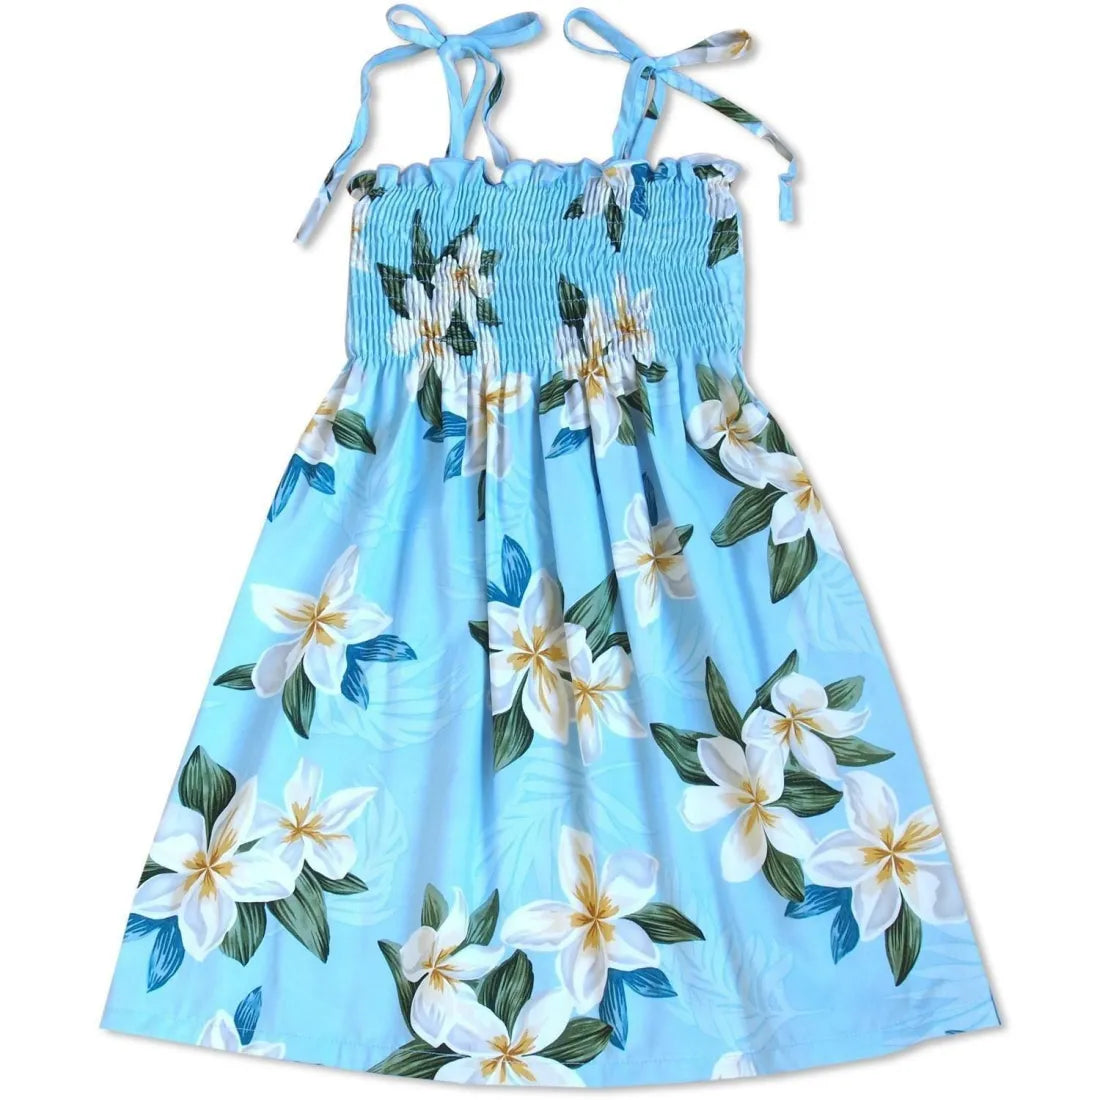 Escape Blue Sunkiss Hawaiian Girl Dress | Beautiful Sky Blue Floral ...